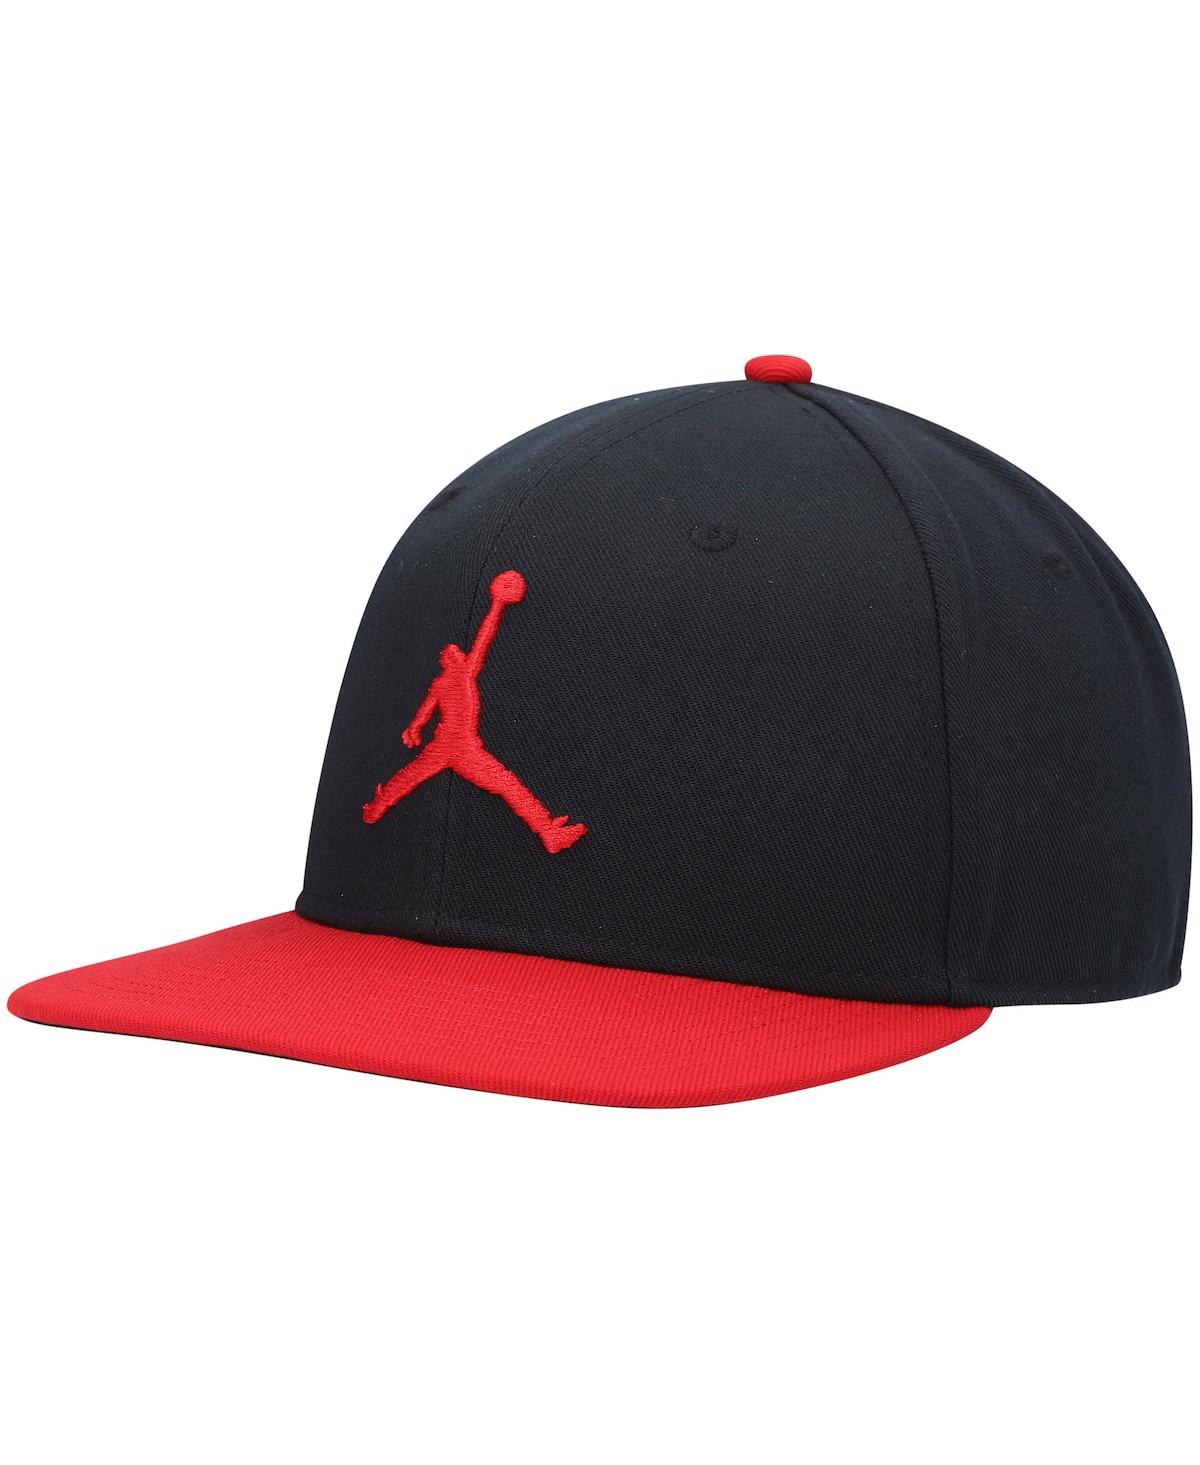 Men's Jordan Jumpman Pro Logo Snapback Adjustable Hat - Black, Red